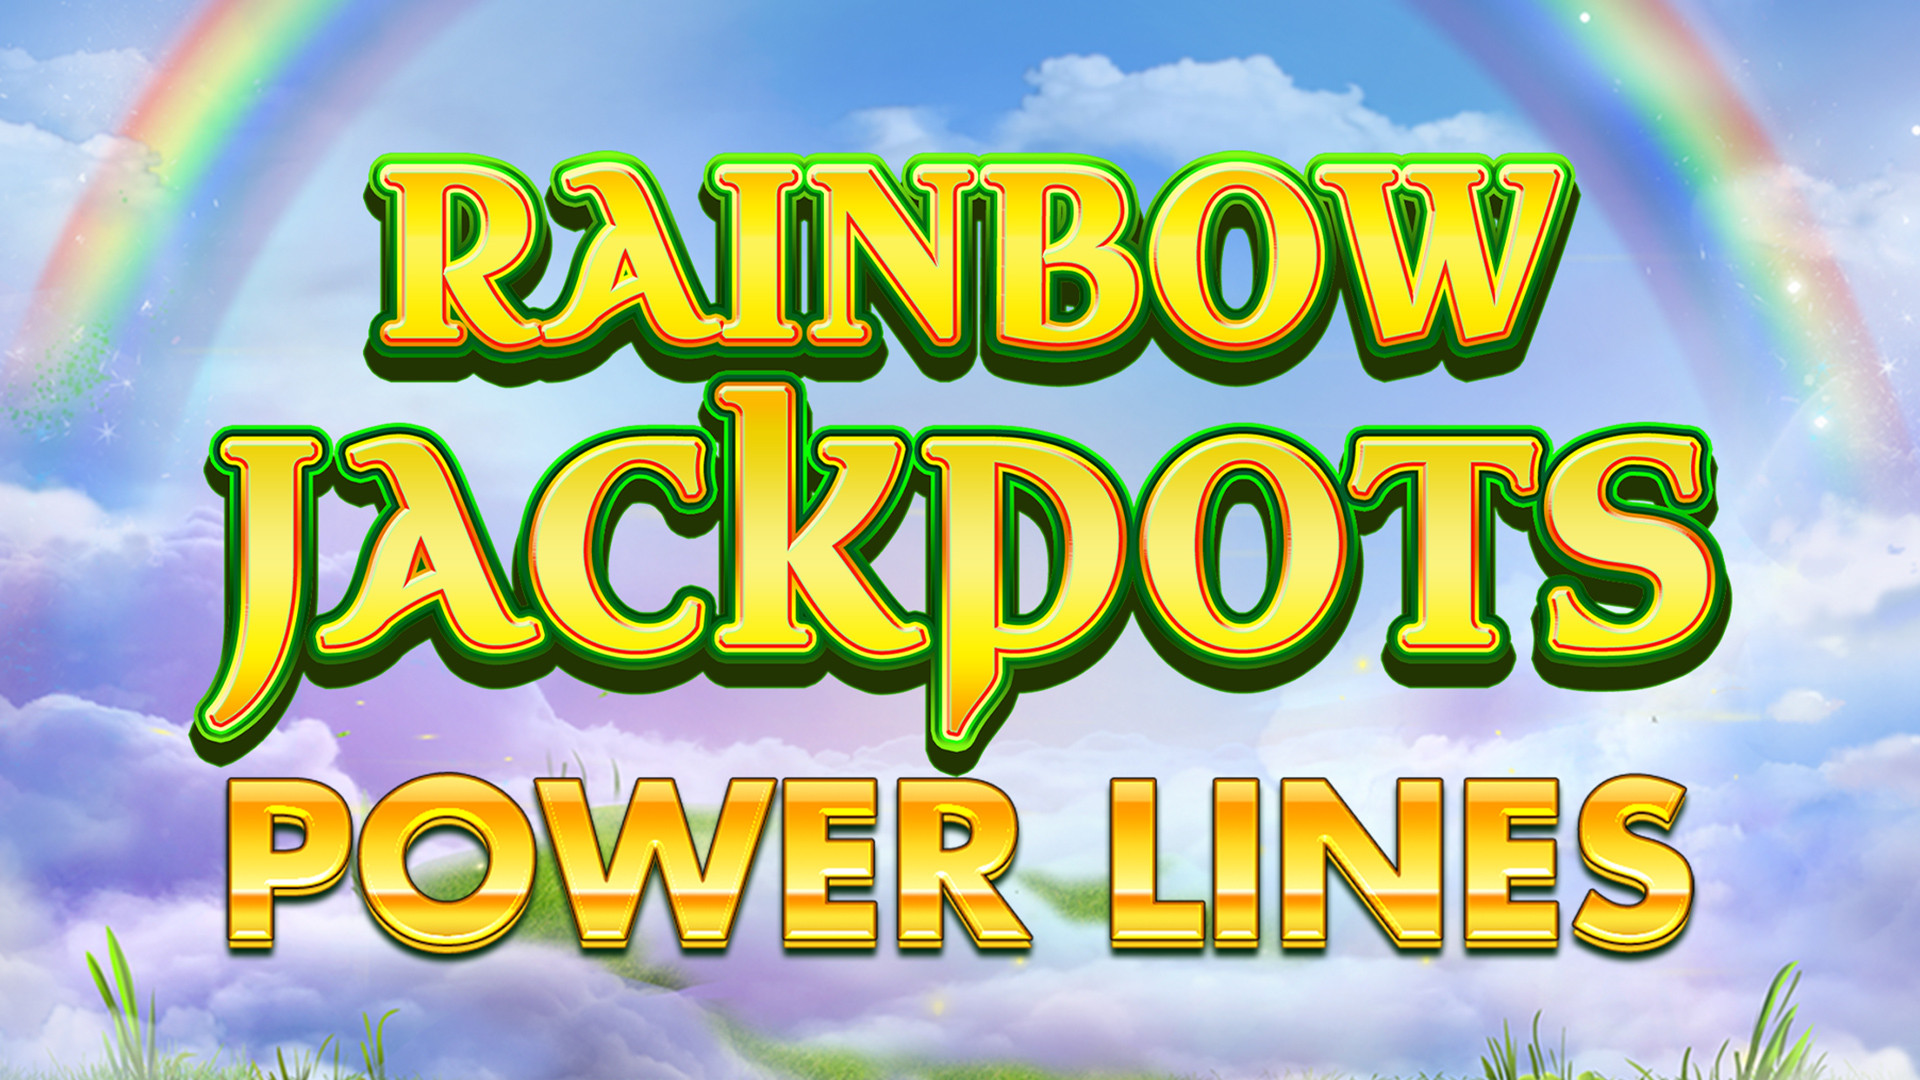 Rainbow Jackpots Power Lines